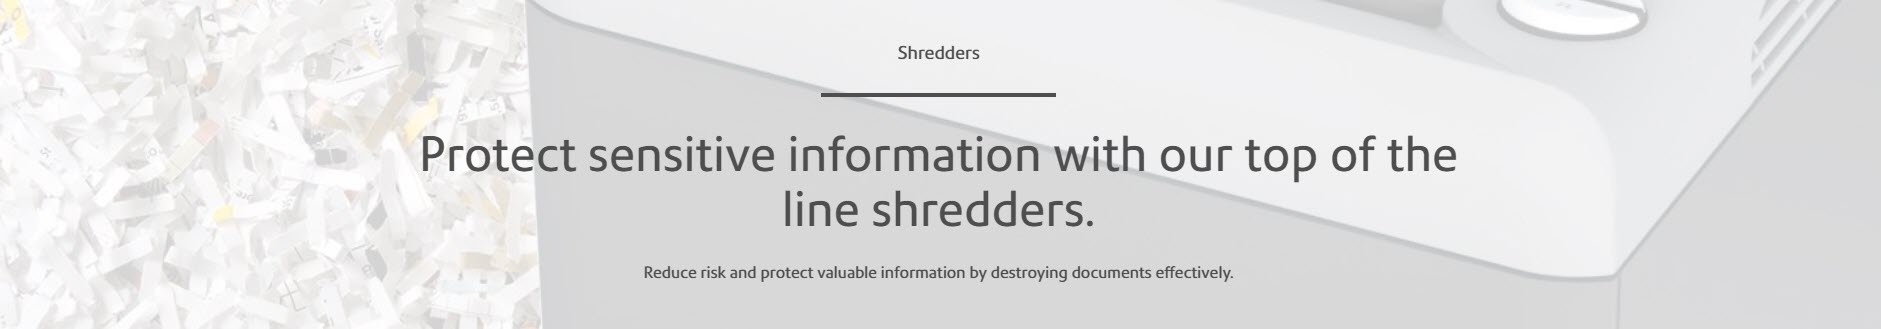 Shredder header image